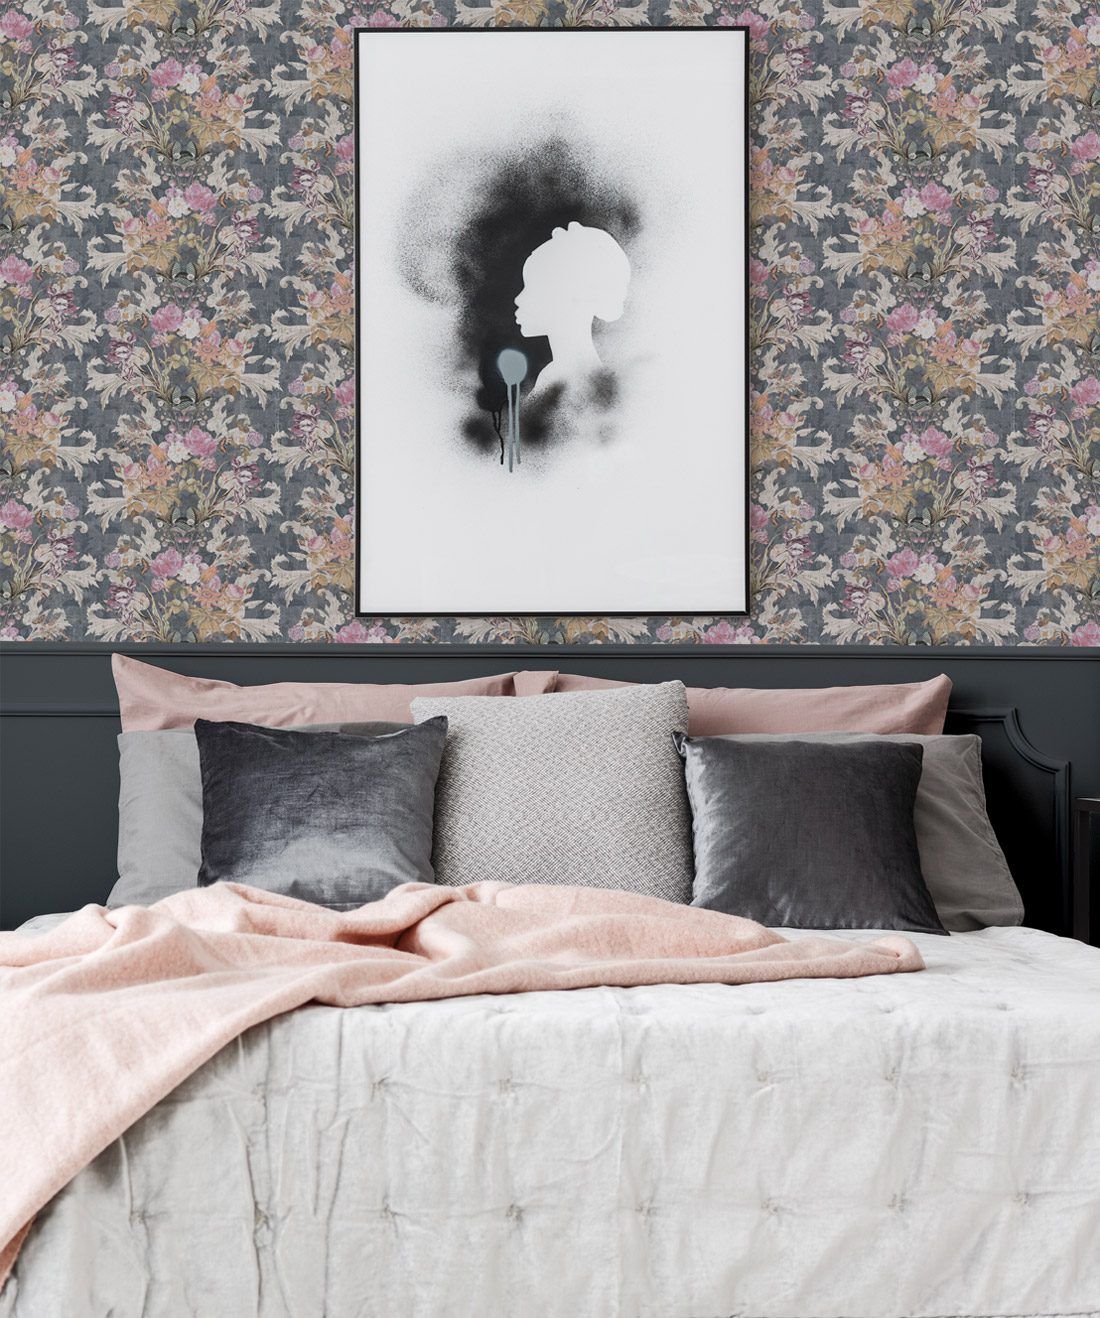 Efflorescence • Stunning Romantic Floral Wallpaper • Milton & King